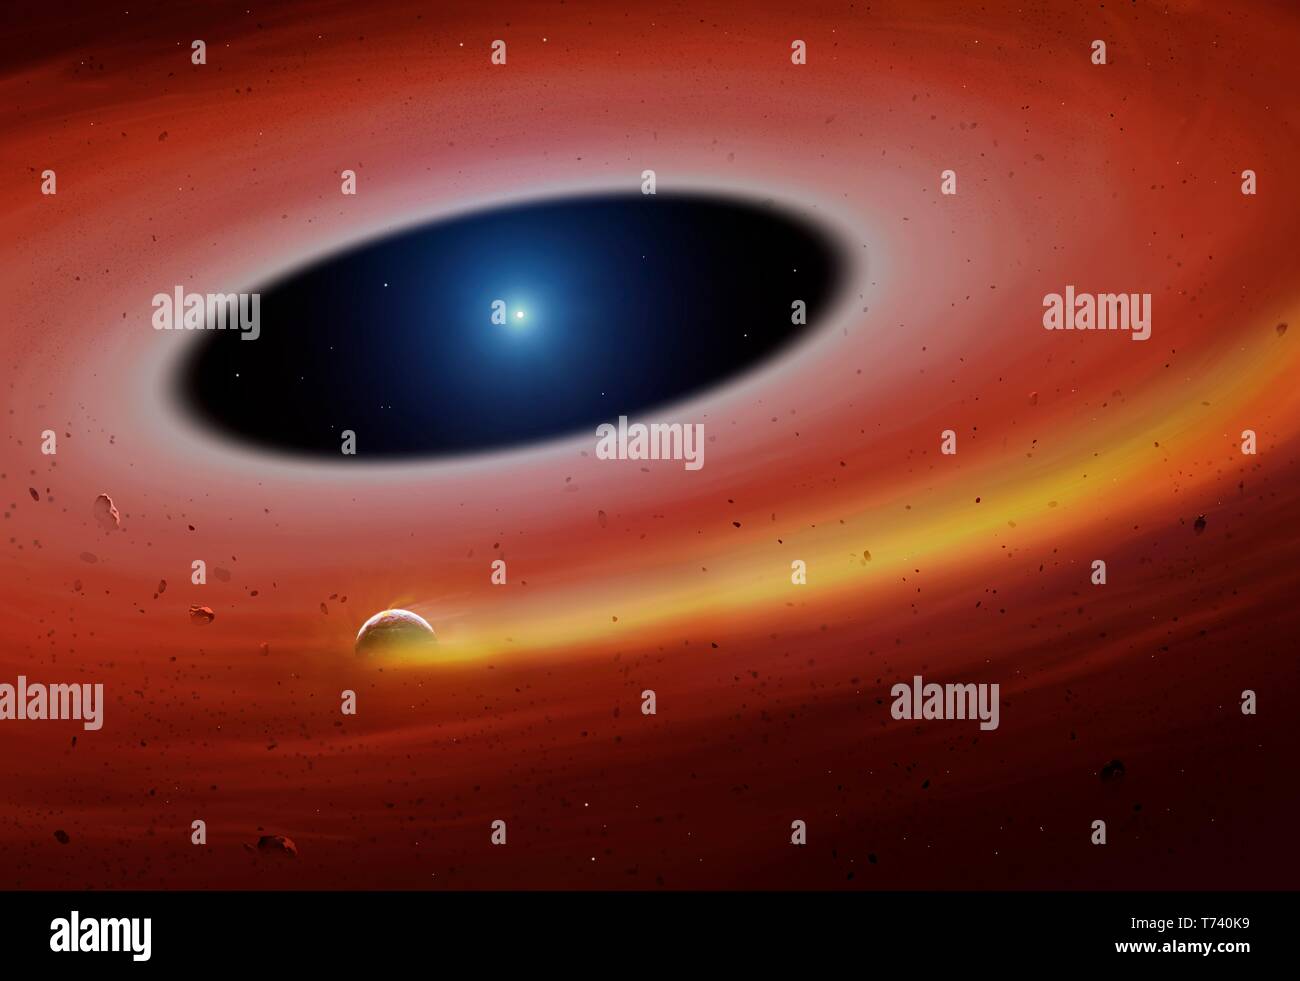 Debris ring and planet around white dwarf, illustration Stock Photo